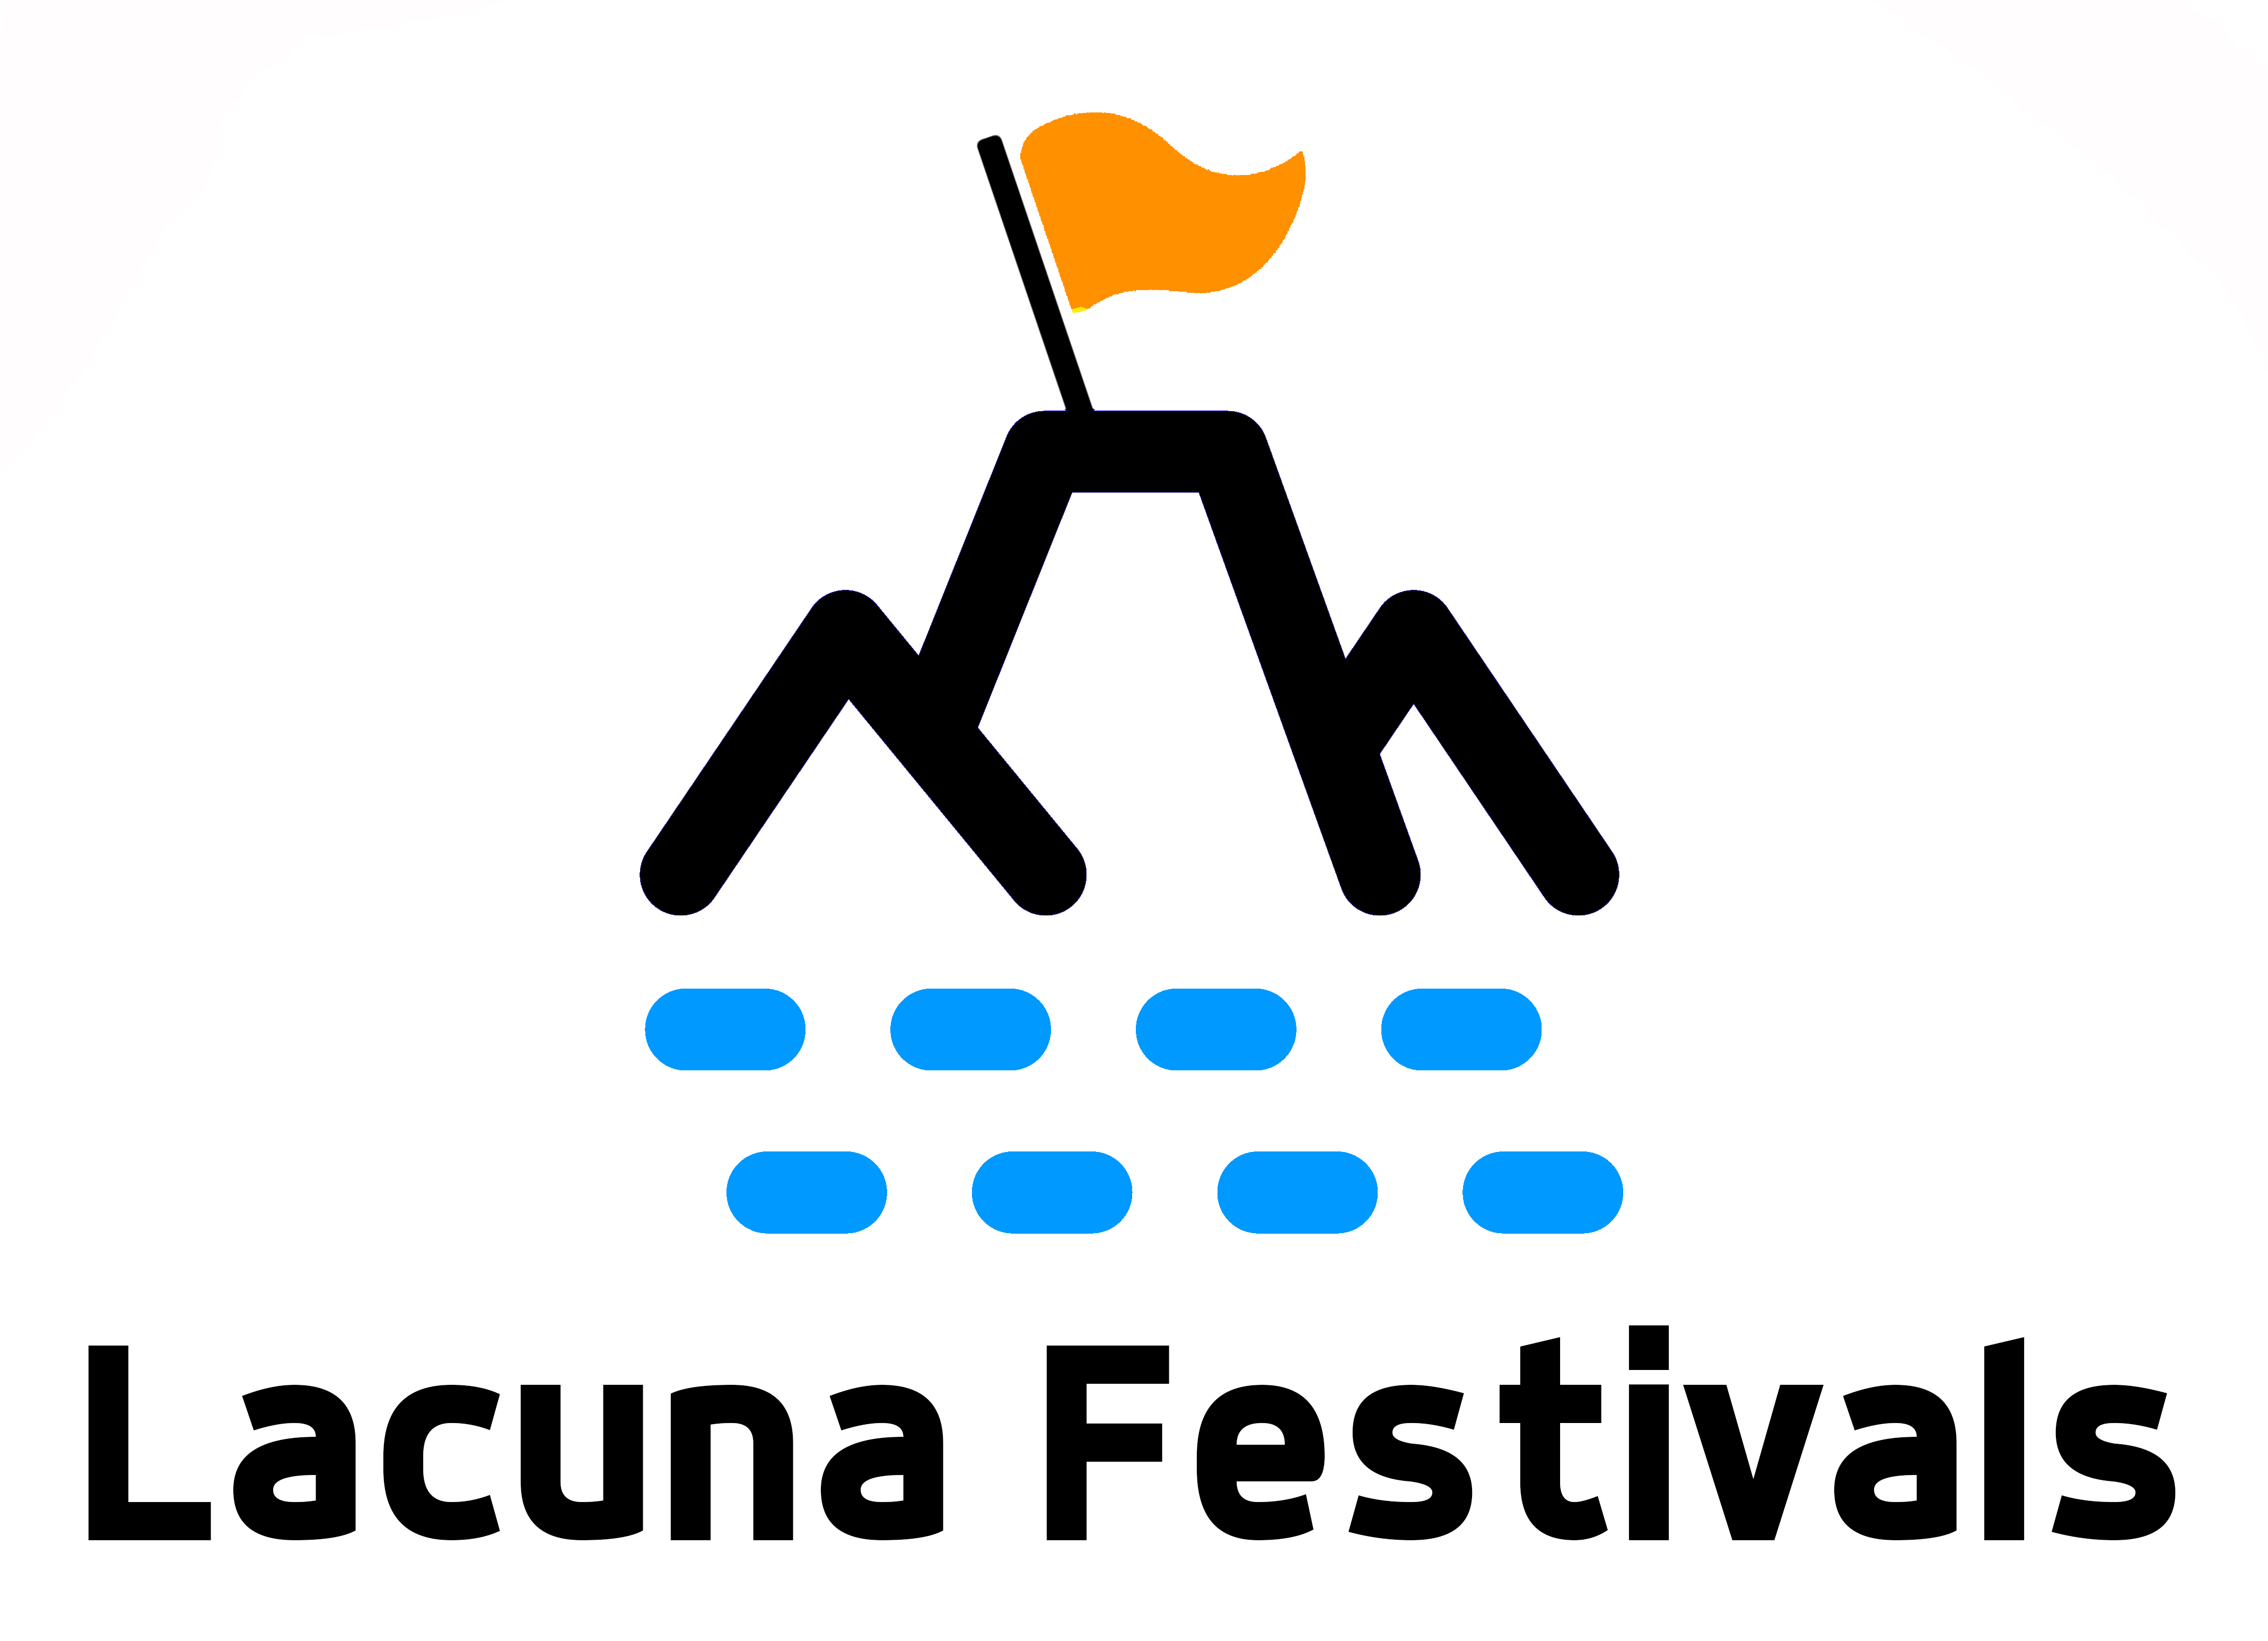 Lacuna Festivals